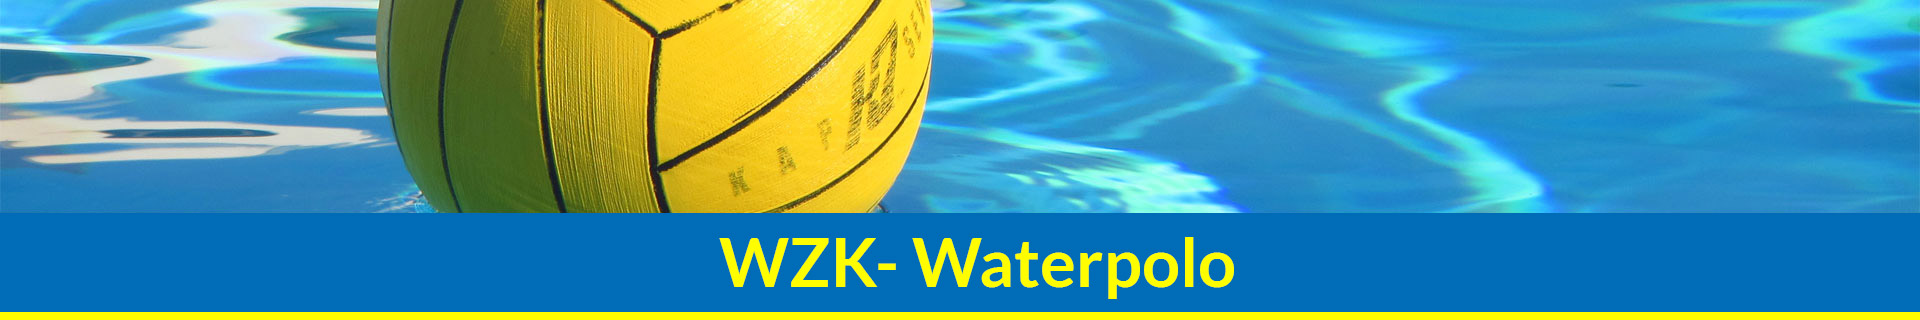 wzk waterpolo banner